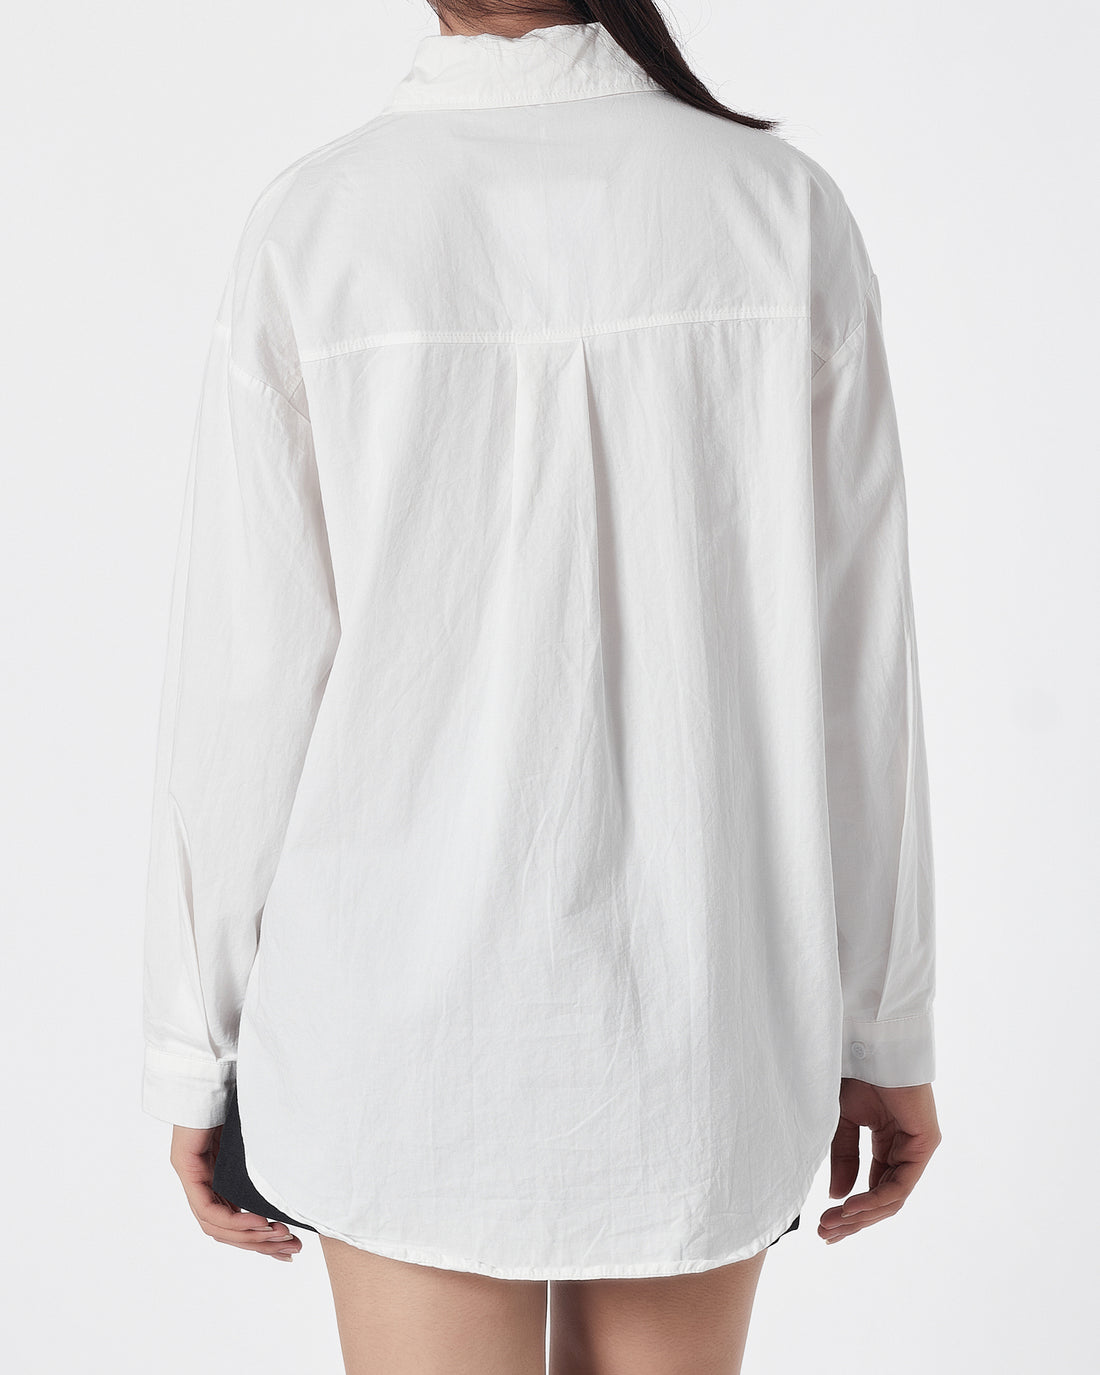 Plain Color Lady White  Shirts Long Sleeve 14.90